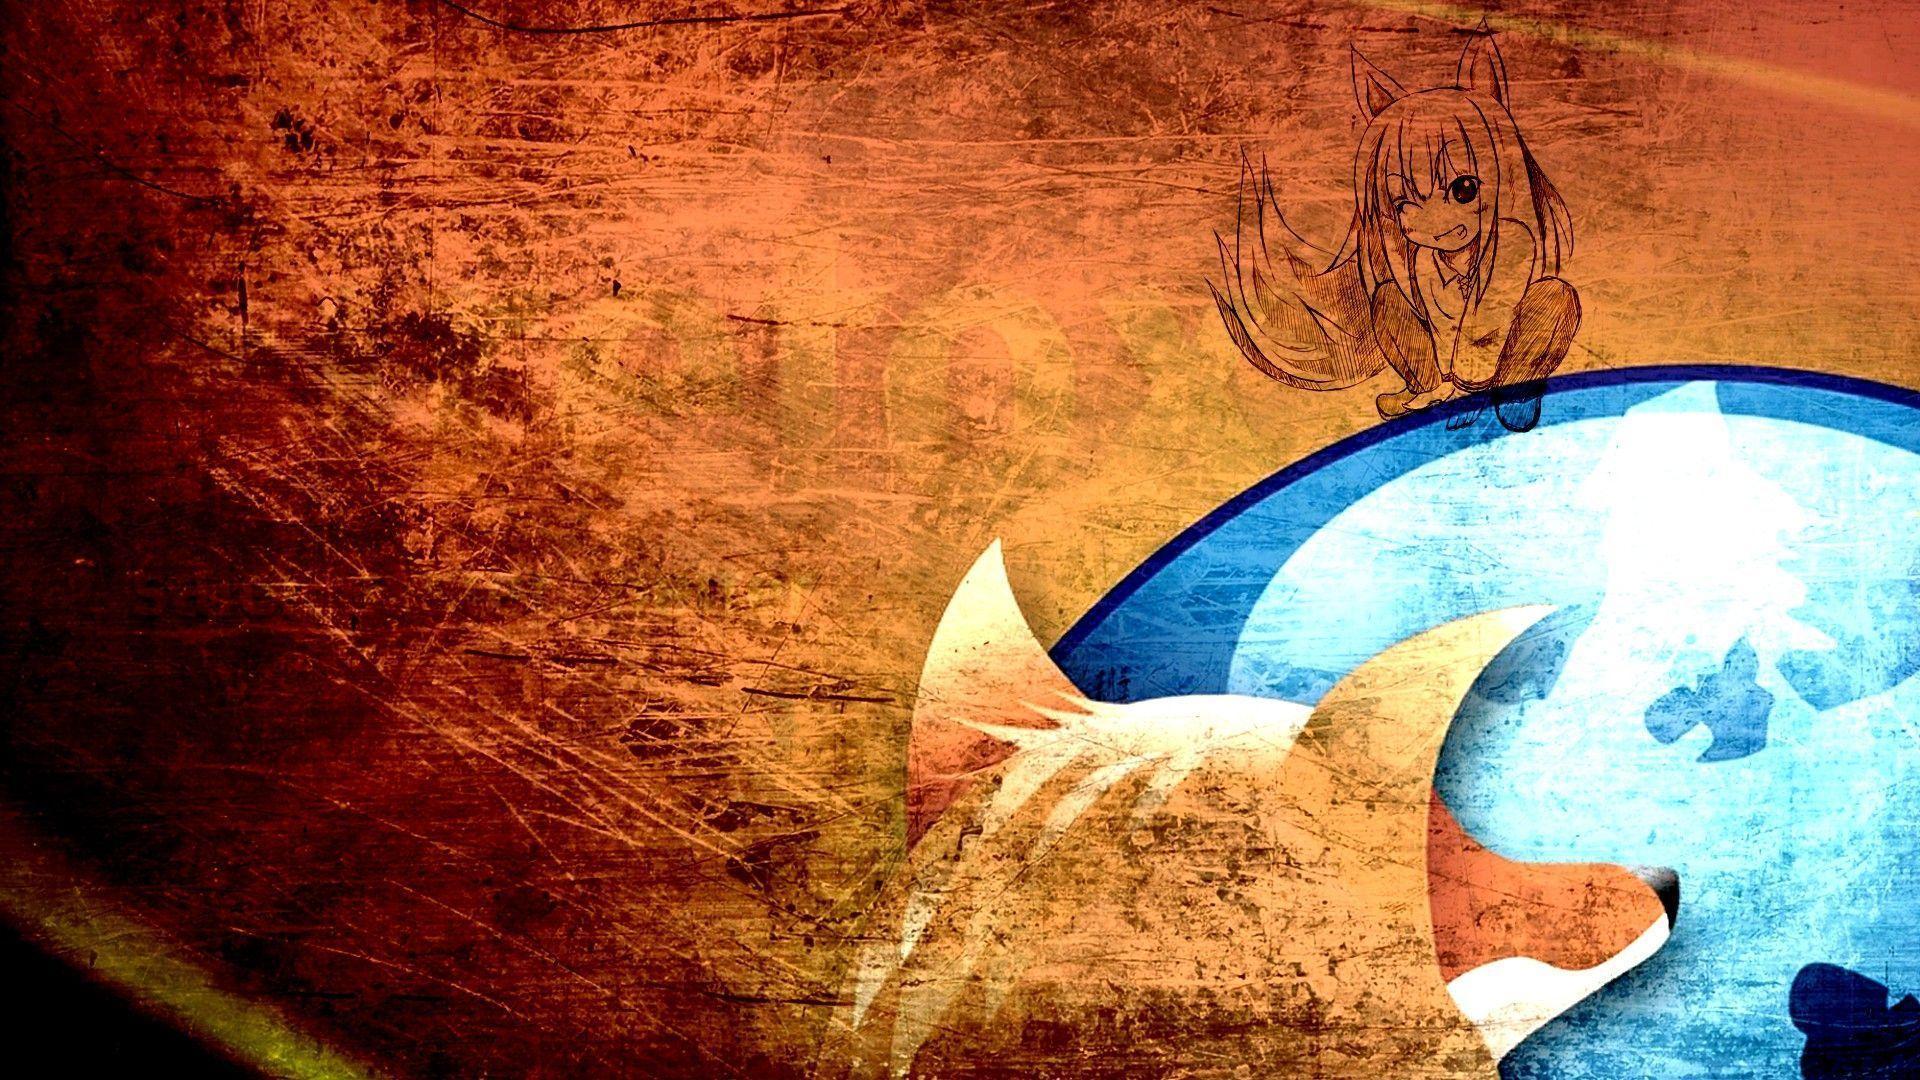 Mozilla Firefox Anime Wallpaper HD Wallpaper